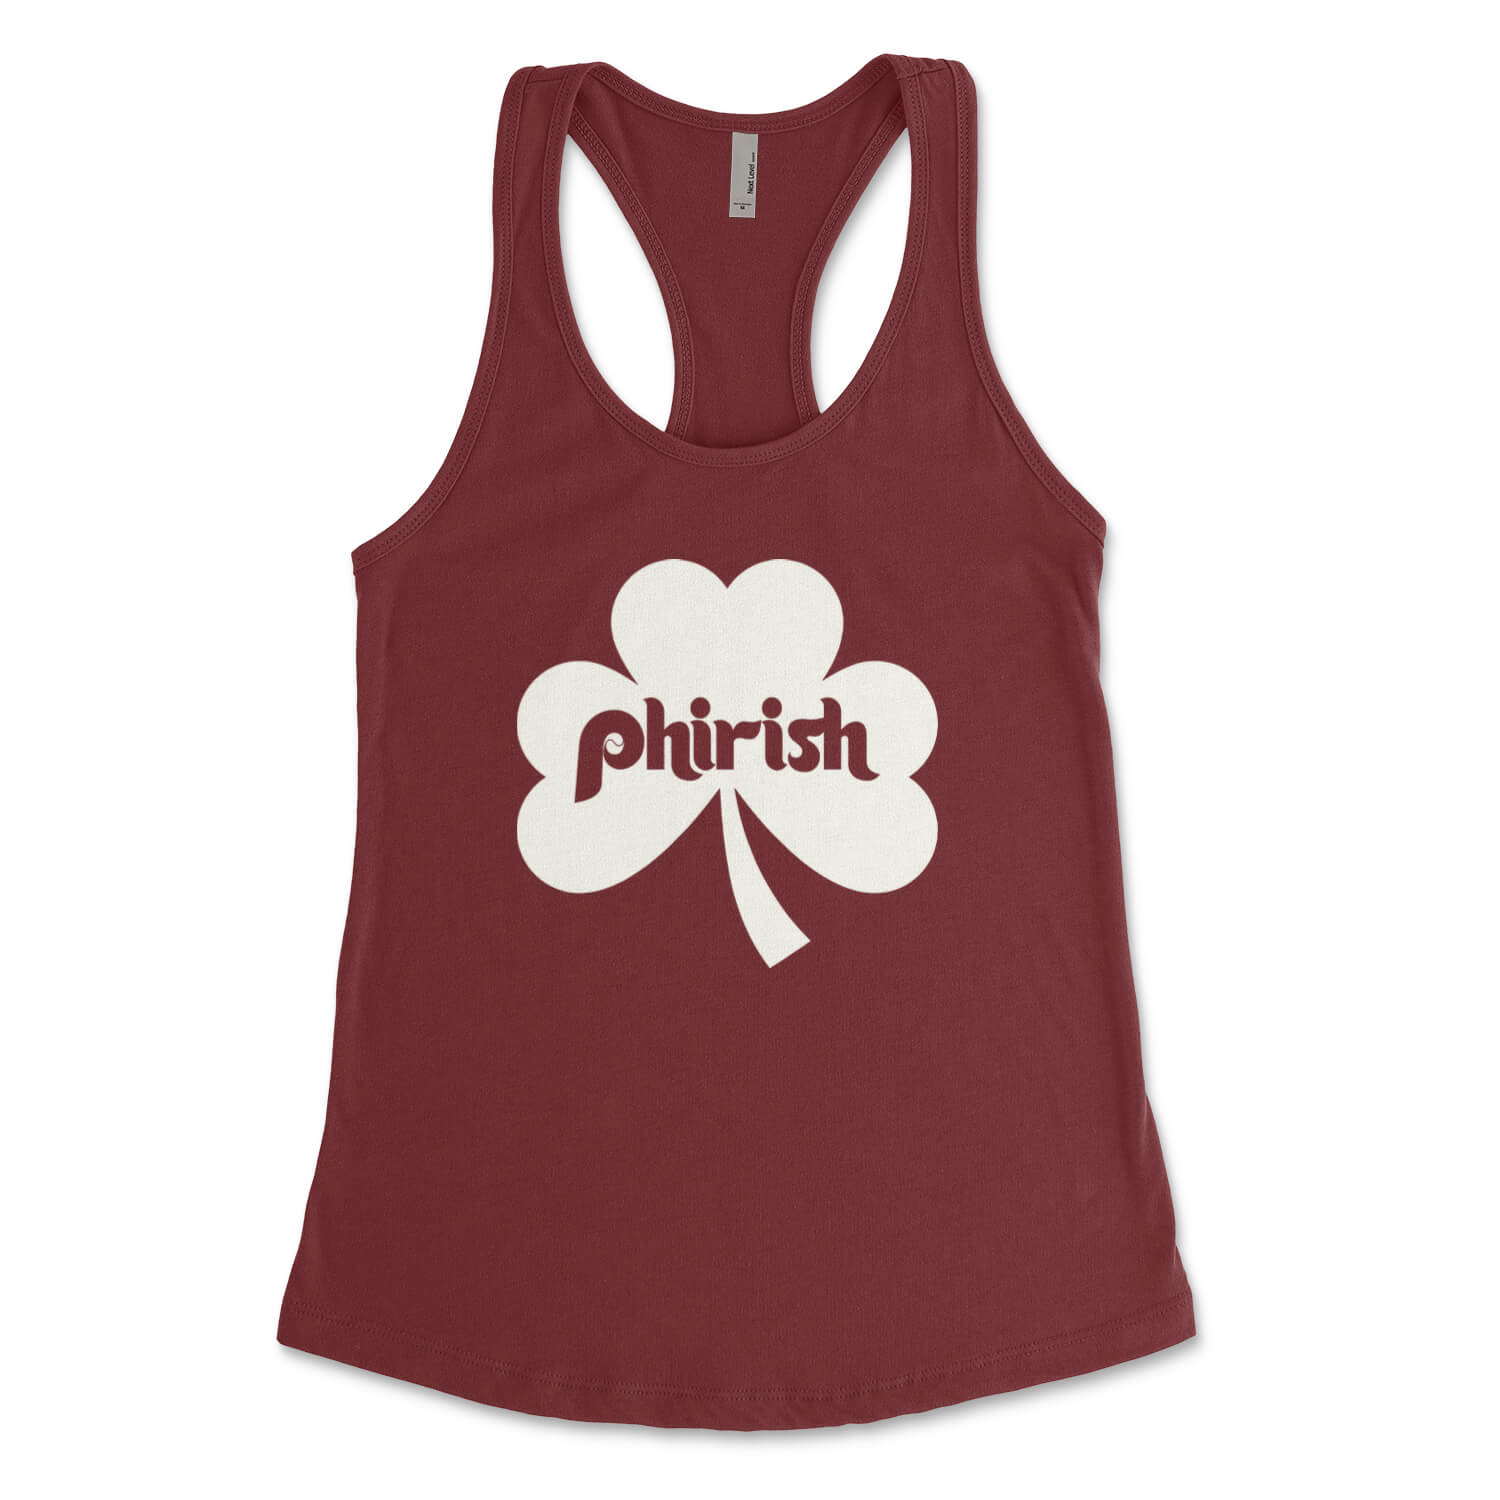 Philadelphia Irish Phirish shamrock st. paddy's day maroon womens tank top from Phillygoat